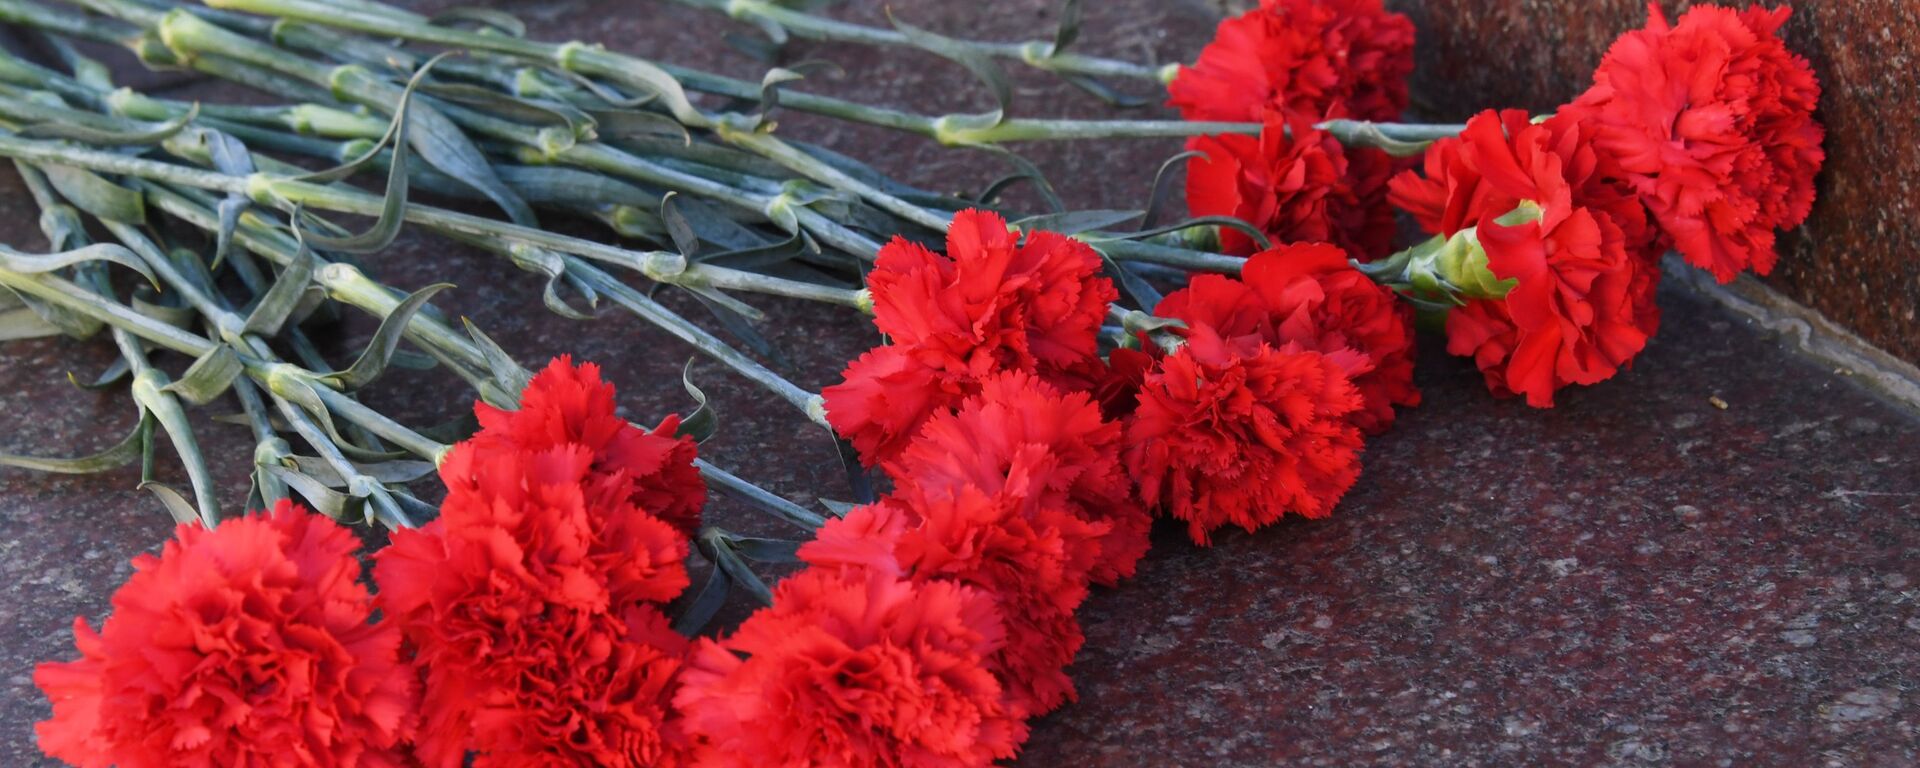 Акции памяти о погибших при нападении на колледж в Керчи - Sputnik Таджикистан, 1920, 28.09.2021